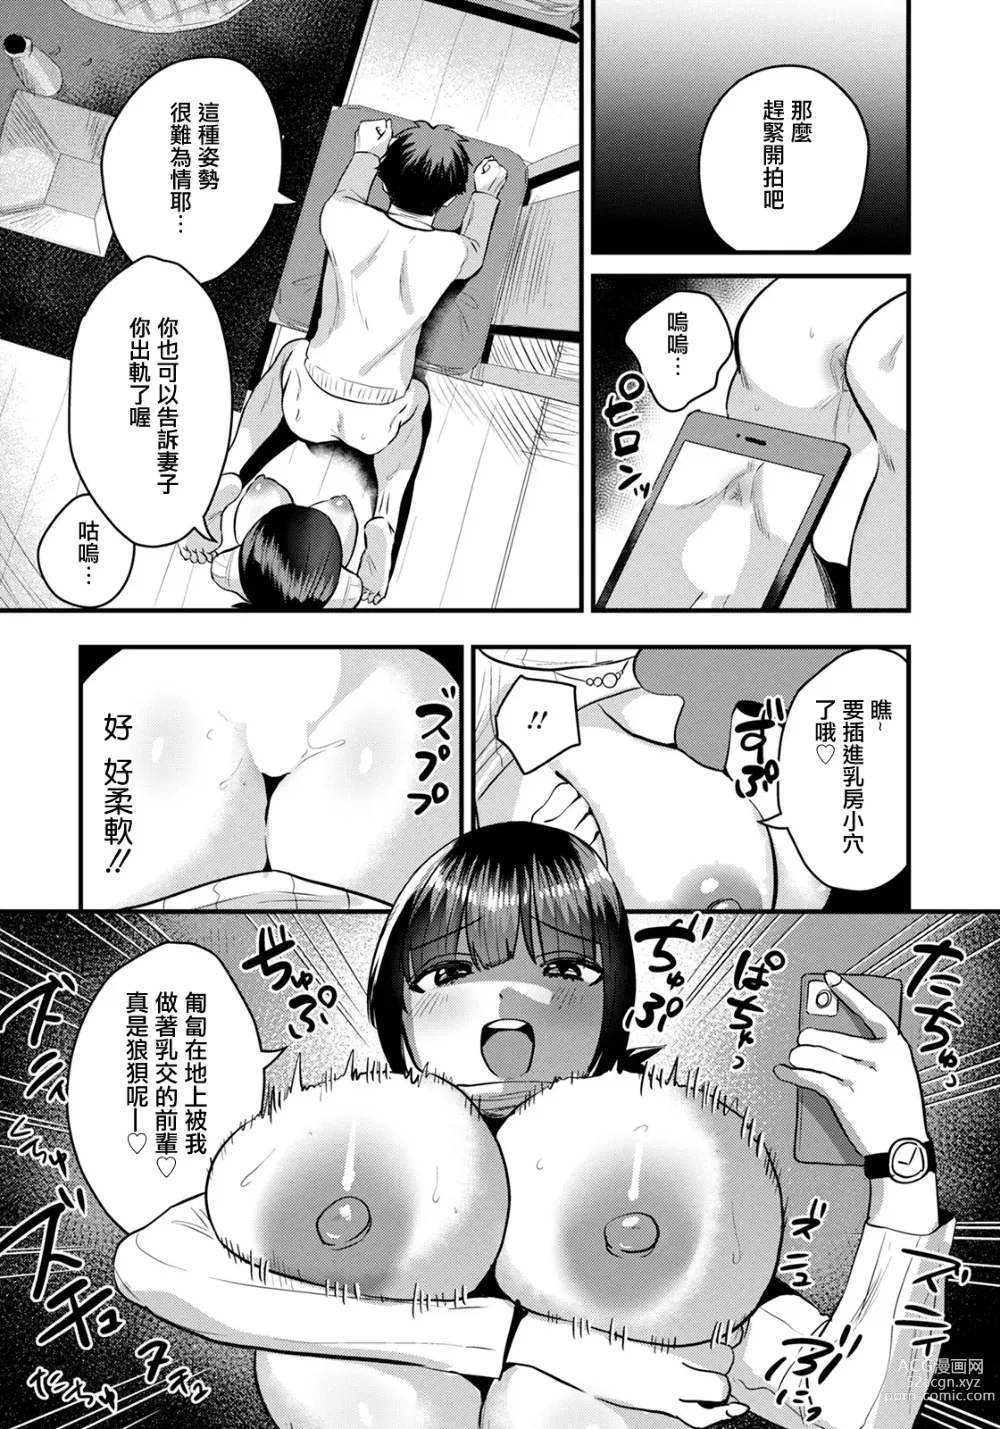 Page 6 of manga Hamedoru Kankei